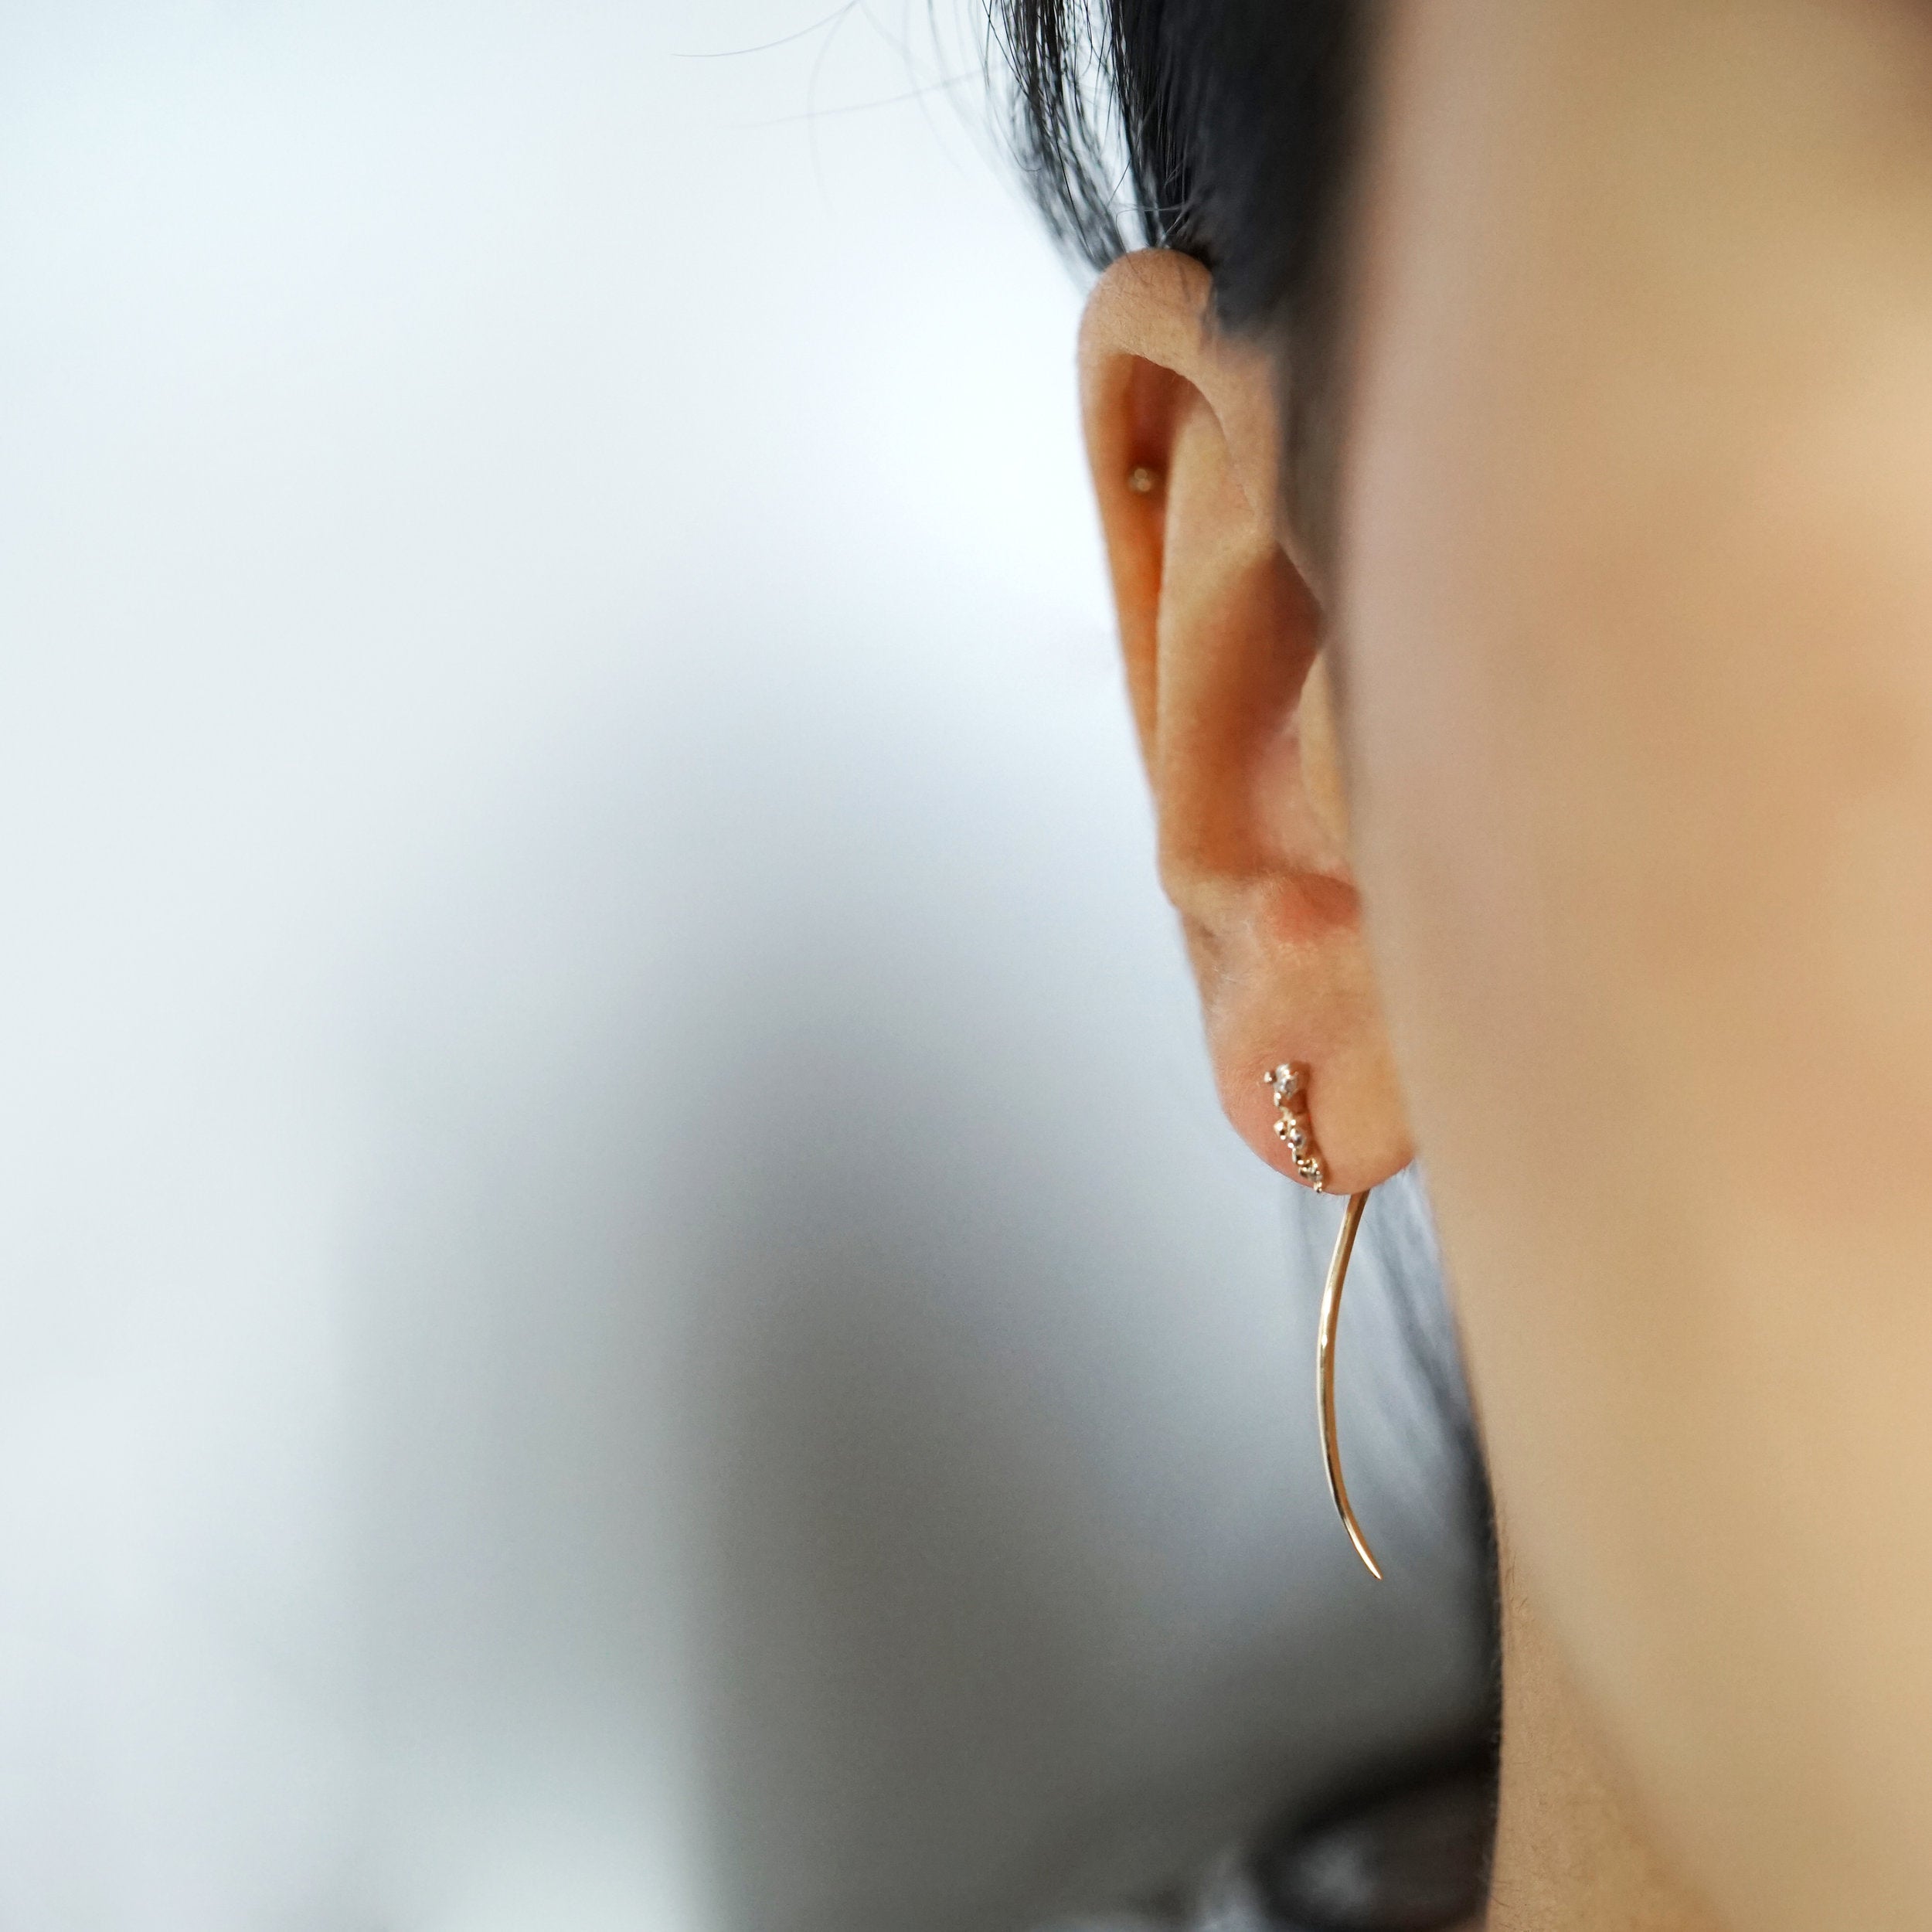 Ambrosia Earring